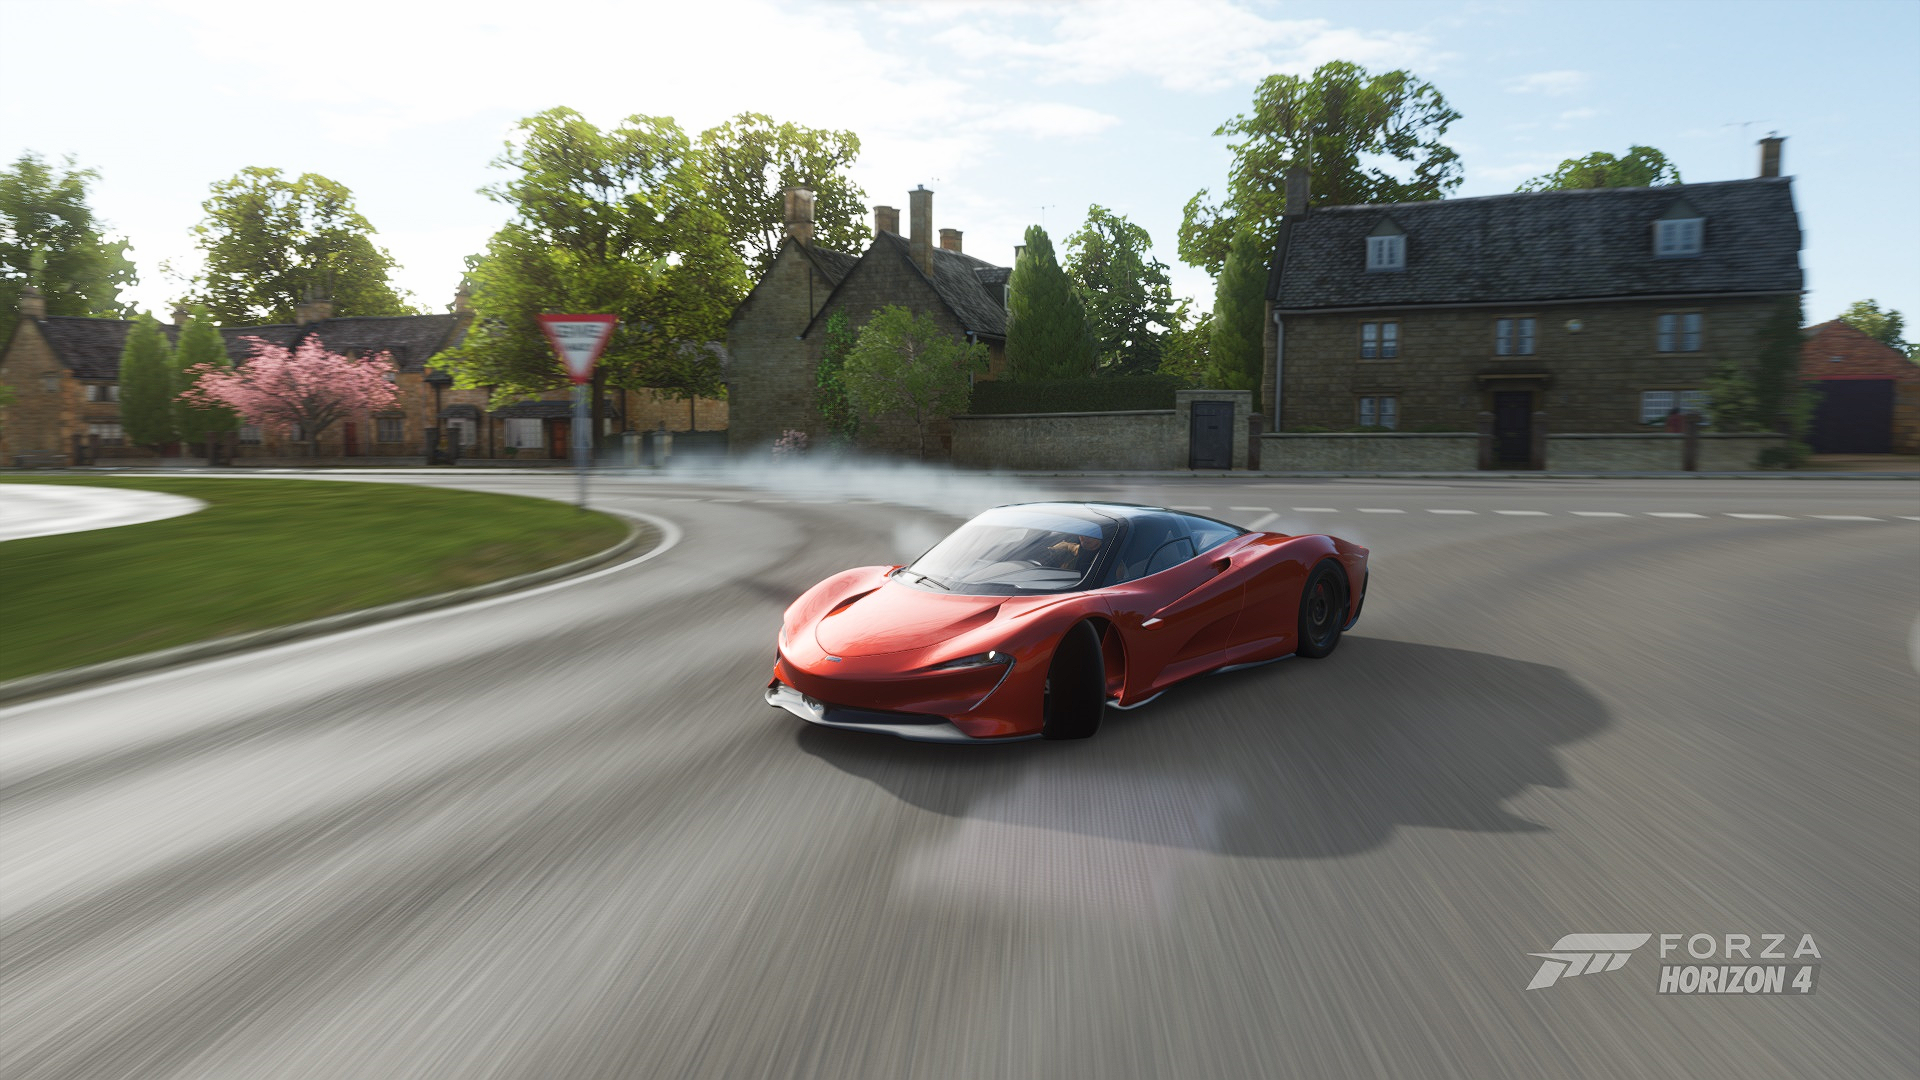 Forza Horizon Forza CGi Car Driving Video Games British Cars Forza Horizon 4 Road PlaygroundGames Lo 1920x1080